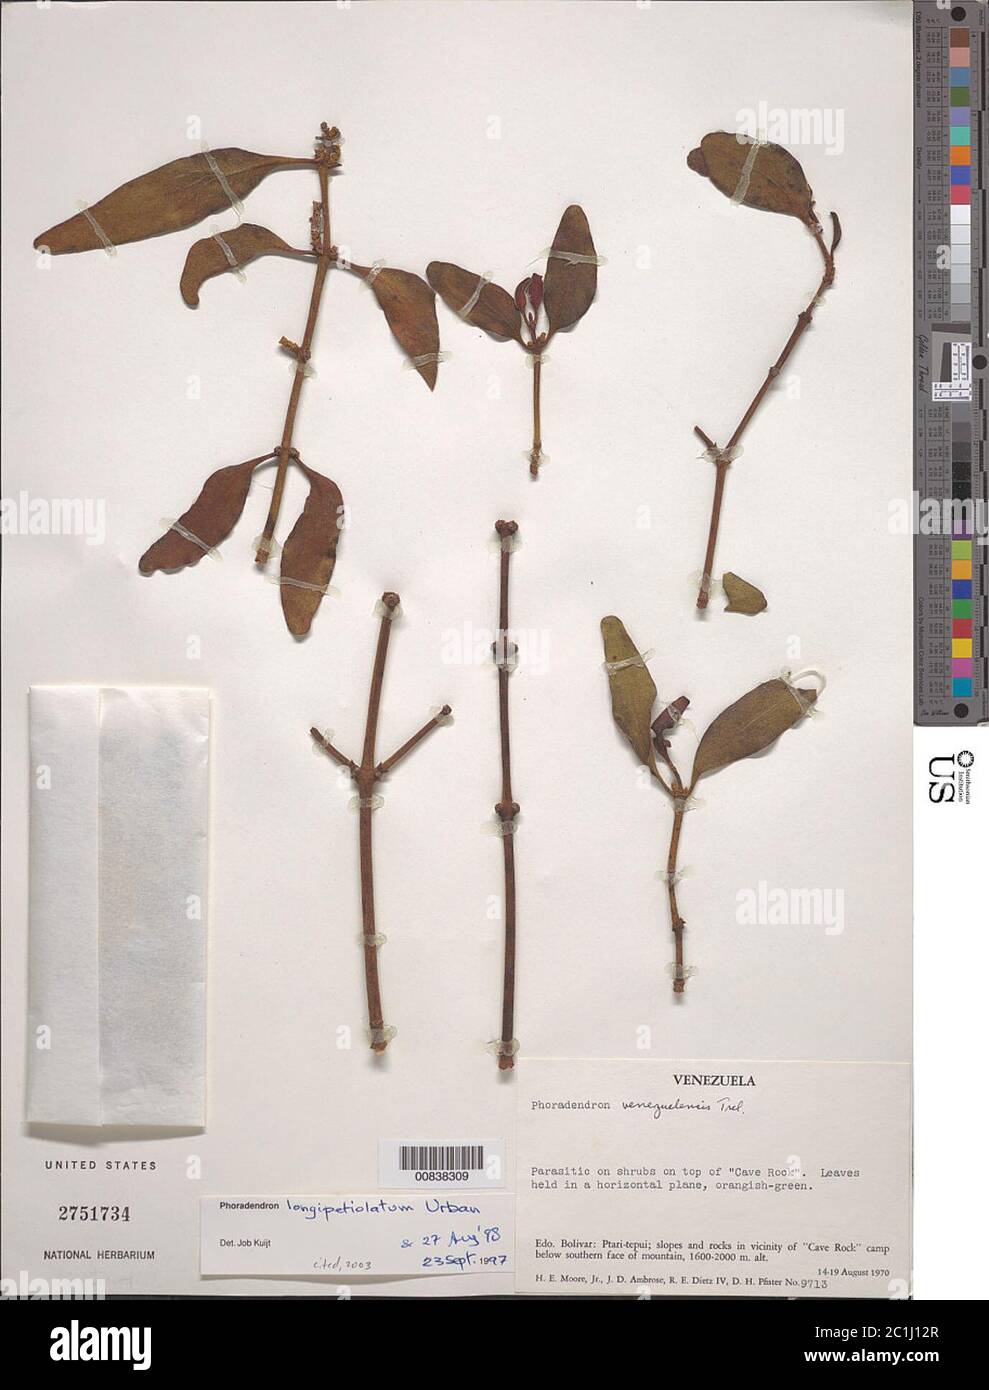 Phoradendron longipetiolatum Urb Phoradendron longipetiolatum Urb. Stock Photo